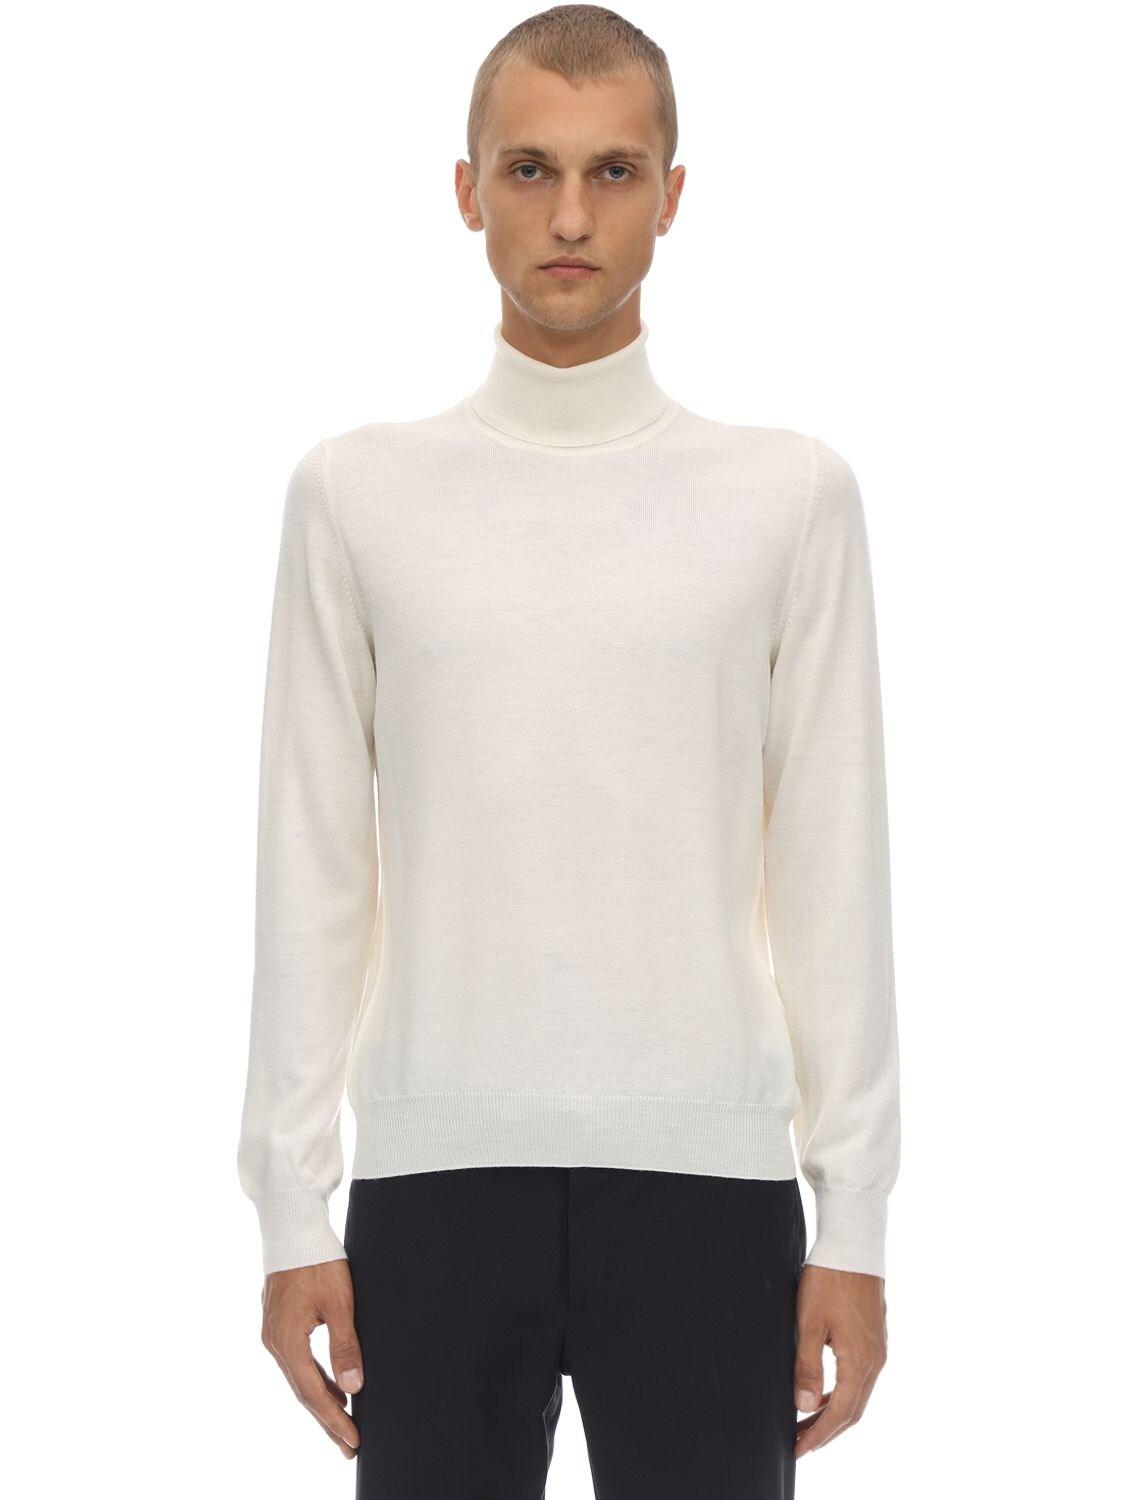 Tagliatore Wool Knit Sweater in White for Men - Lyst